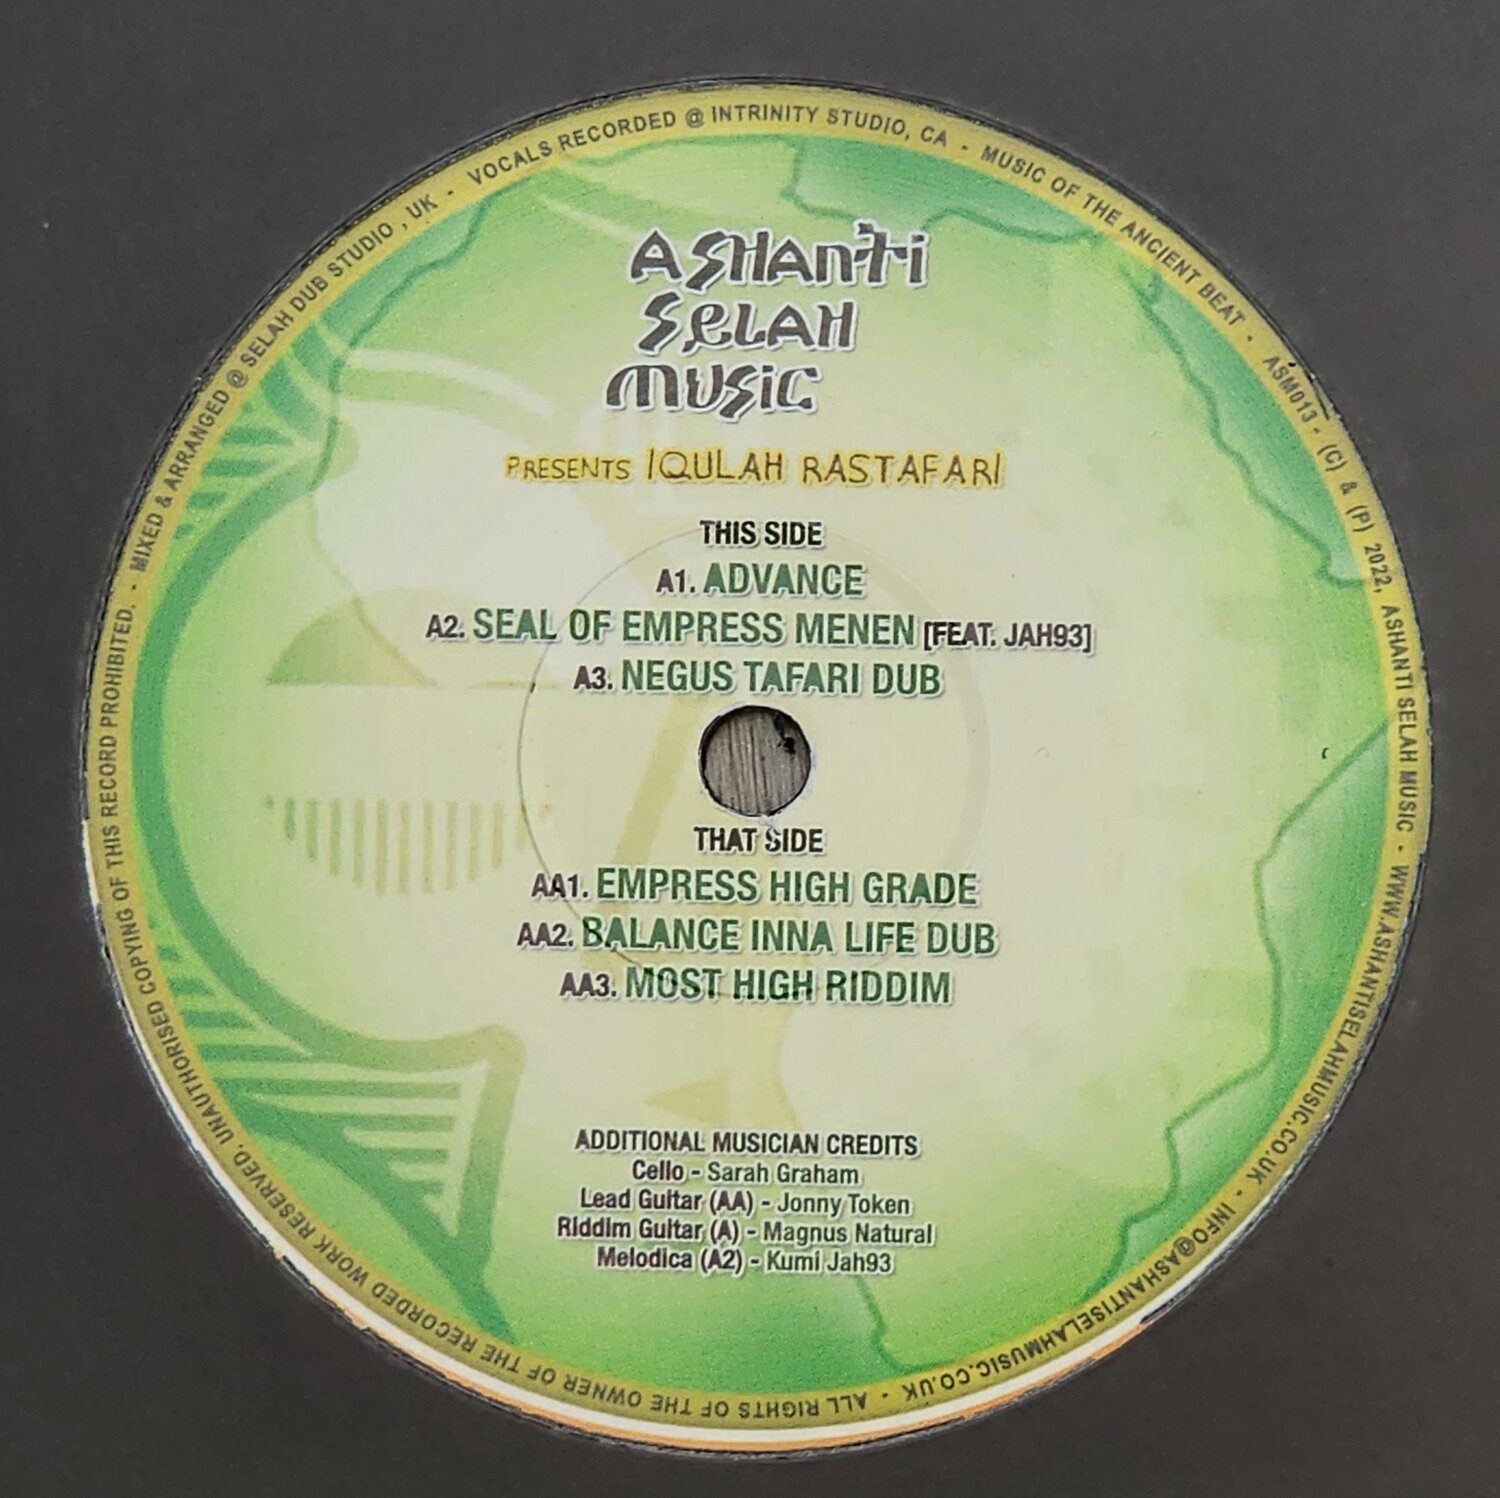 ASM-013 Iqulah Rastafari / Ashanti Selah - Advance + Empress High